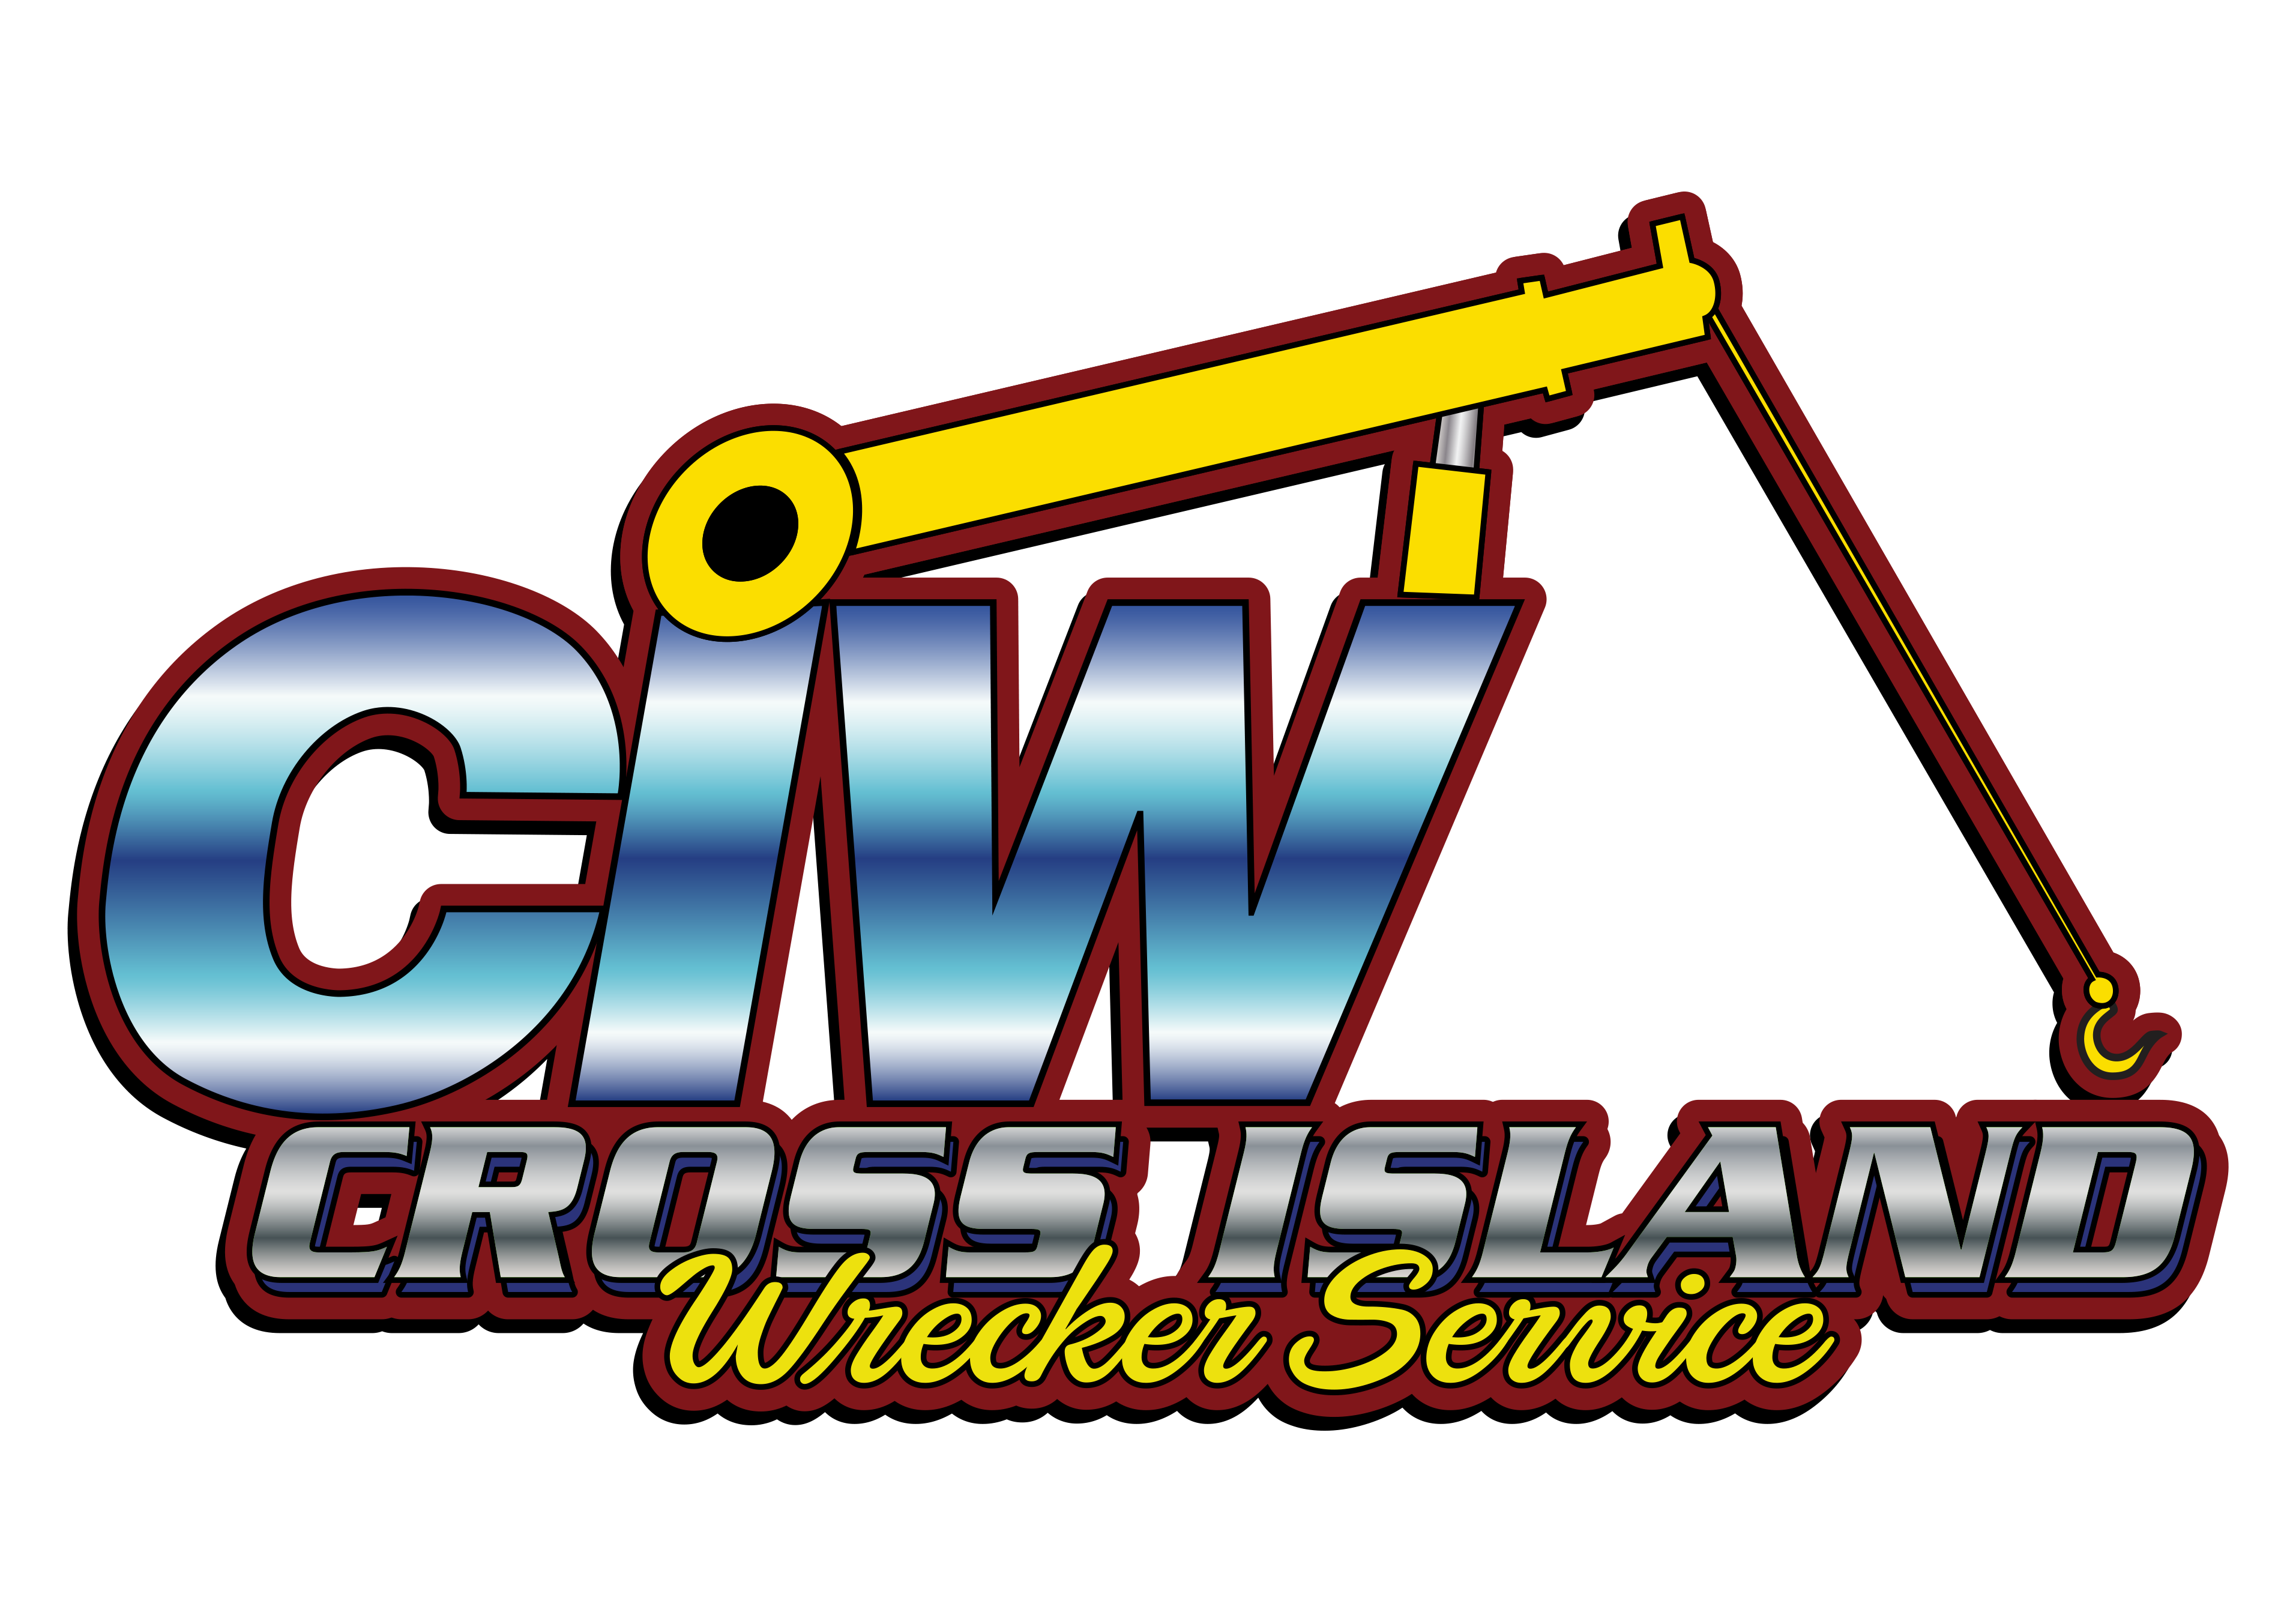 Cross Island Wrecker Service